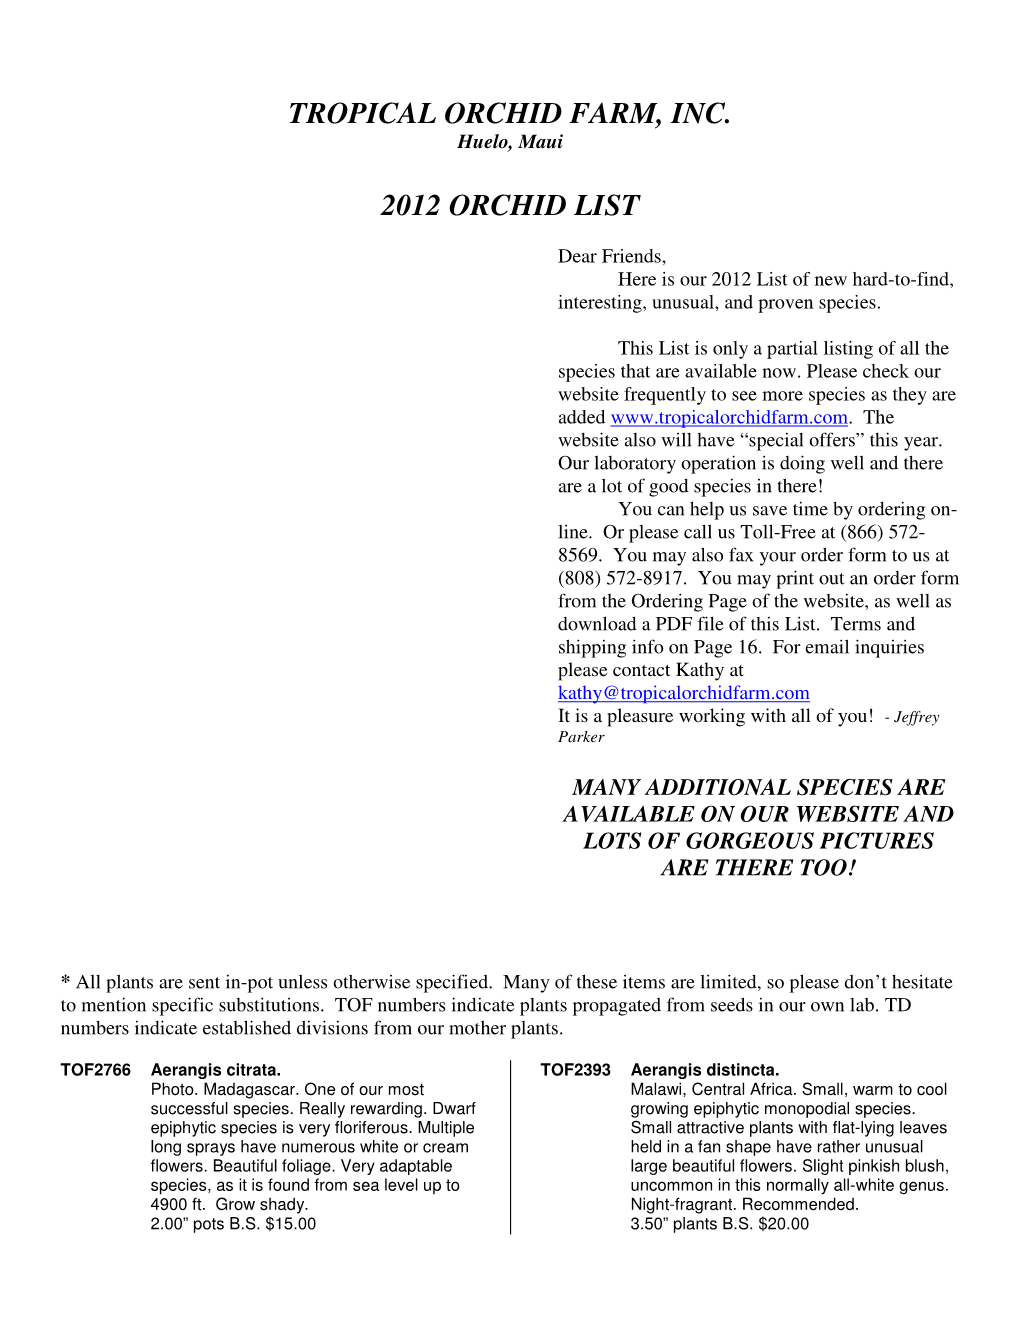 Tropical Orchid Farm, Inc. 2012 Orchid List